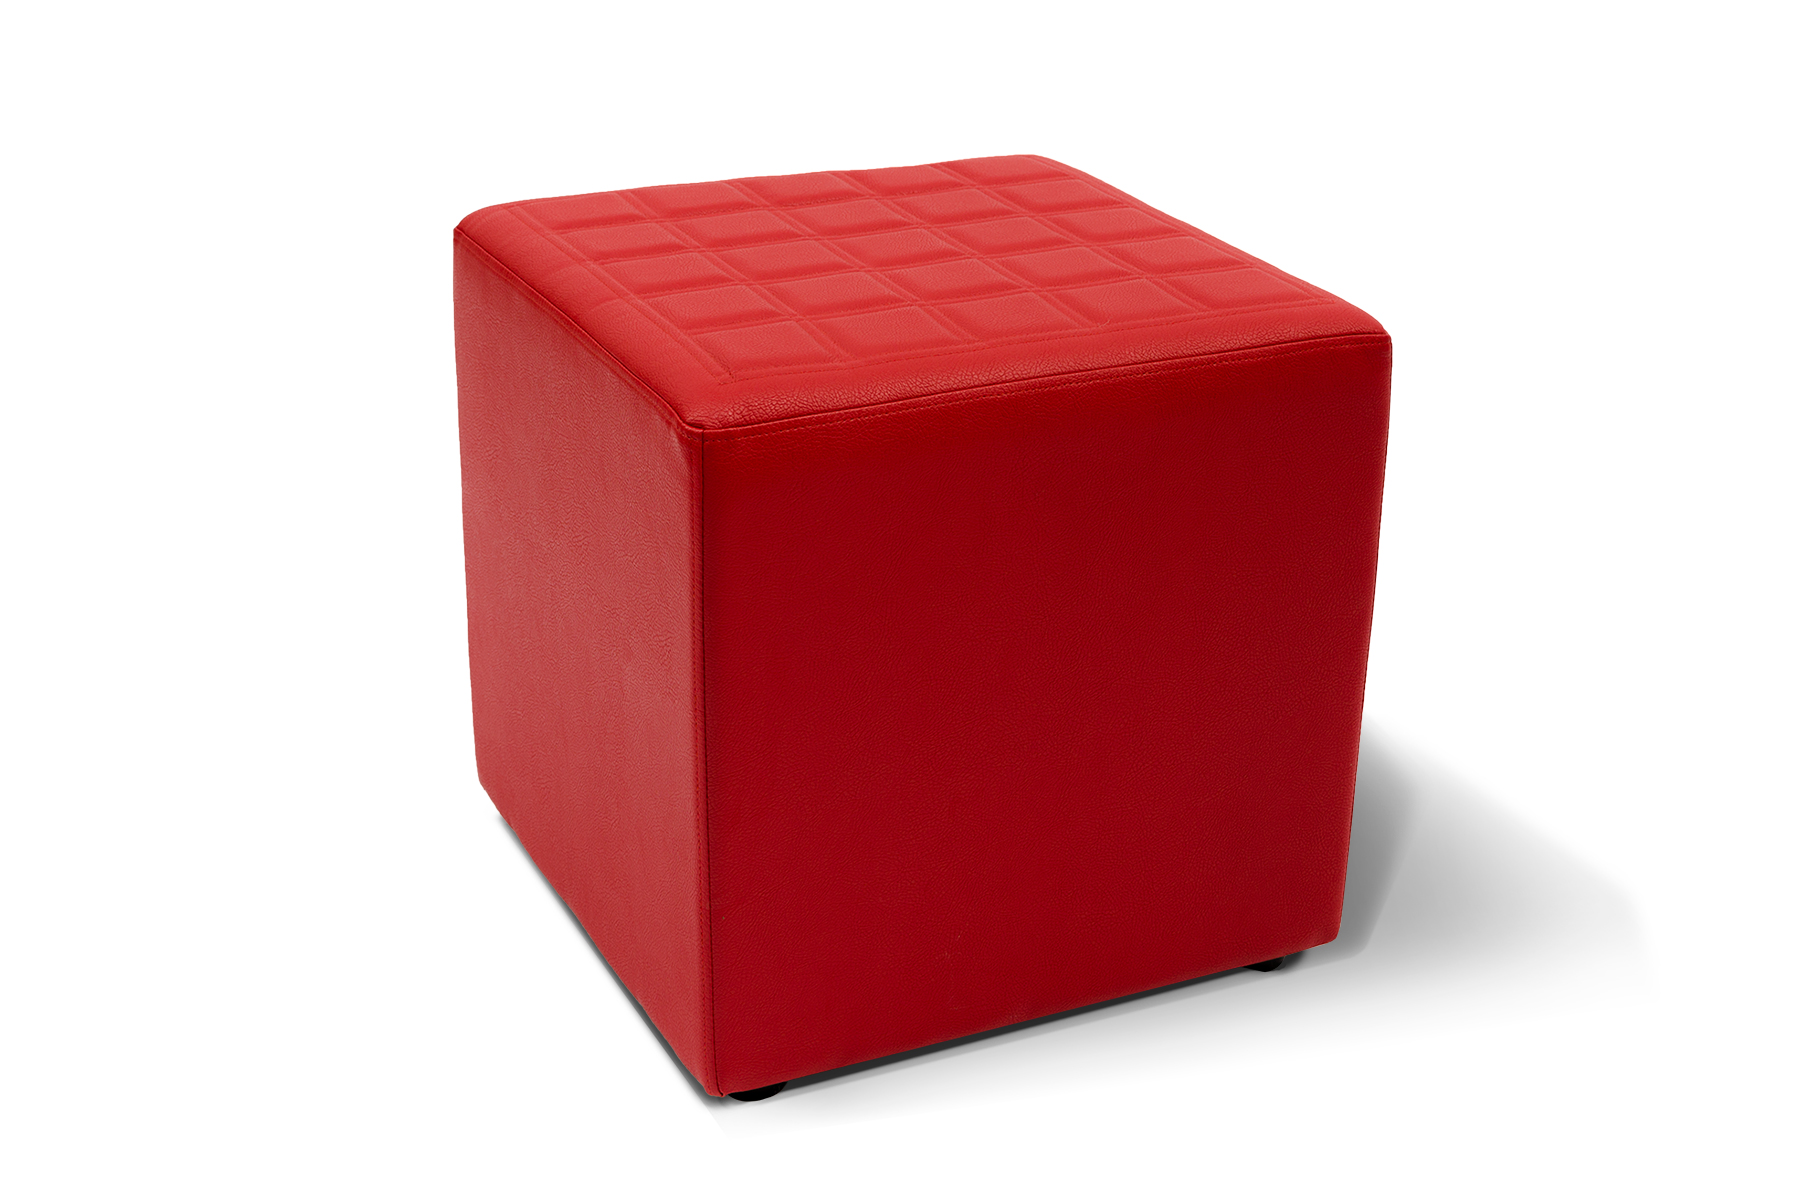 Lounge cube vierkant kunstleder L47xB47xH47cm rood